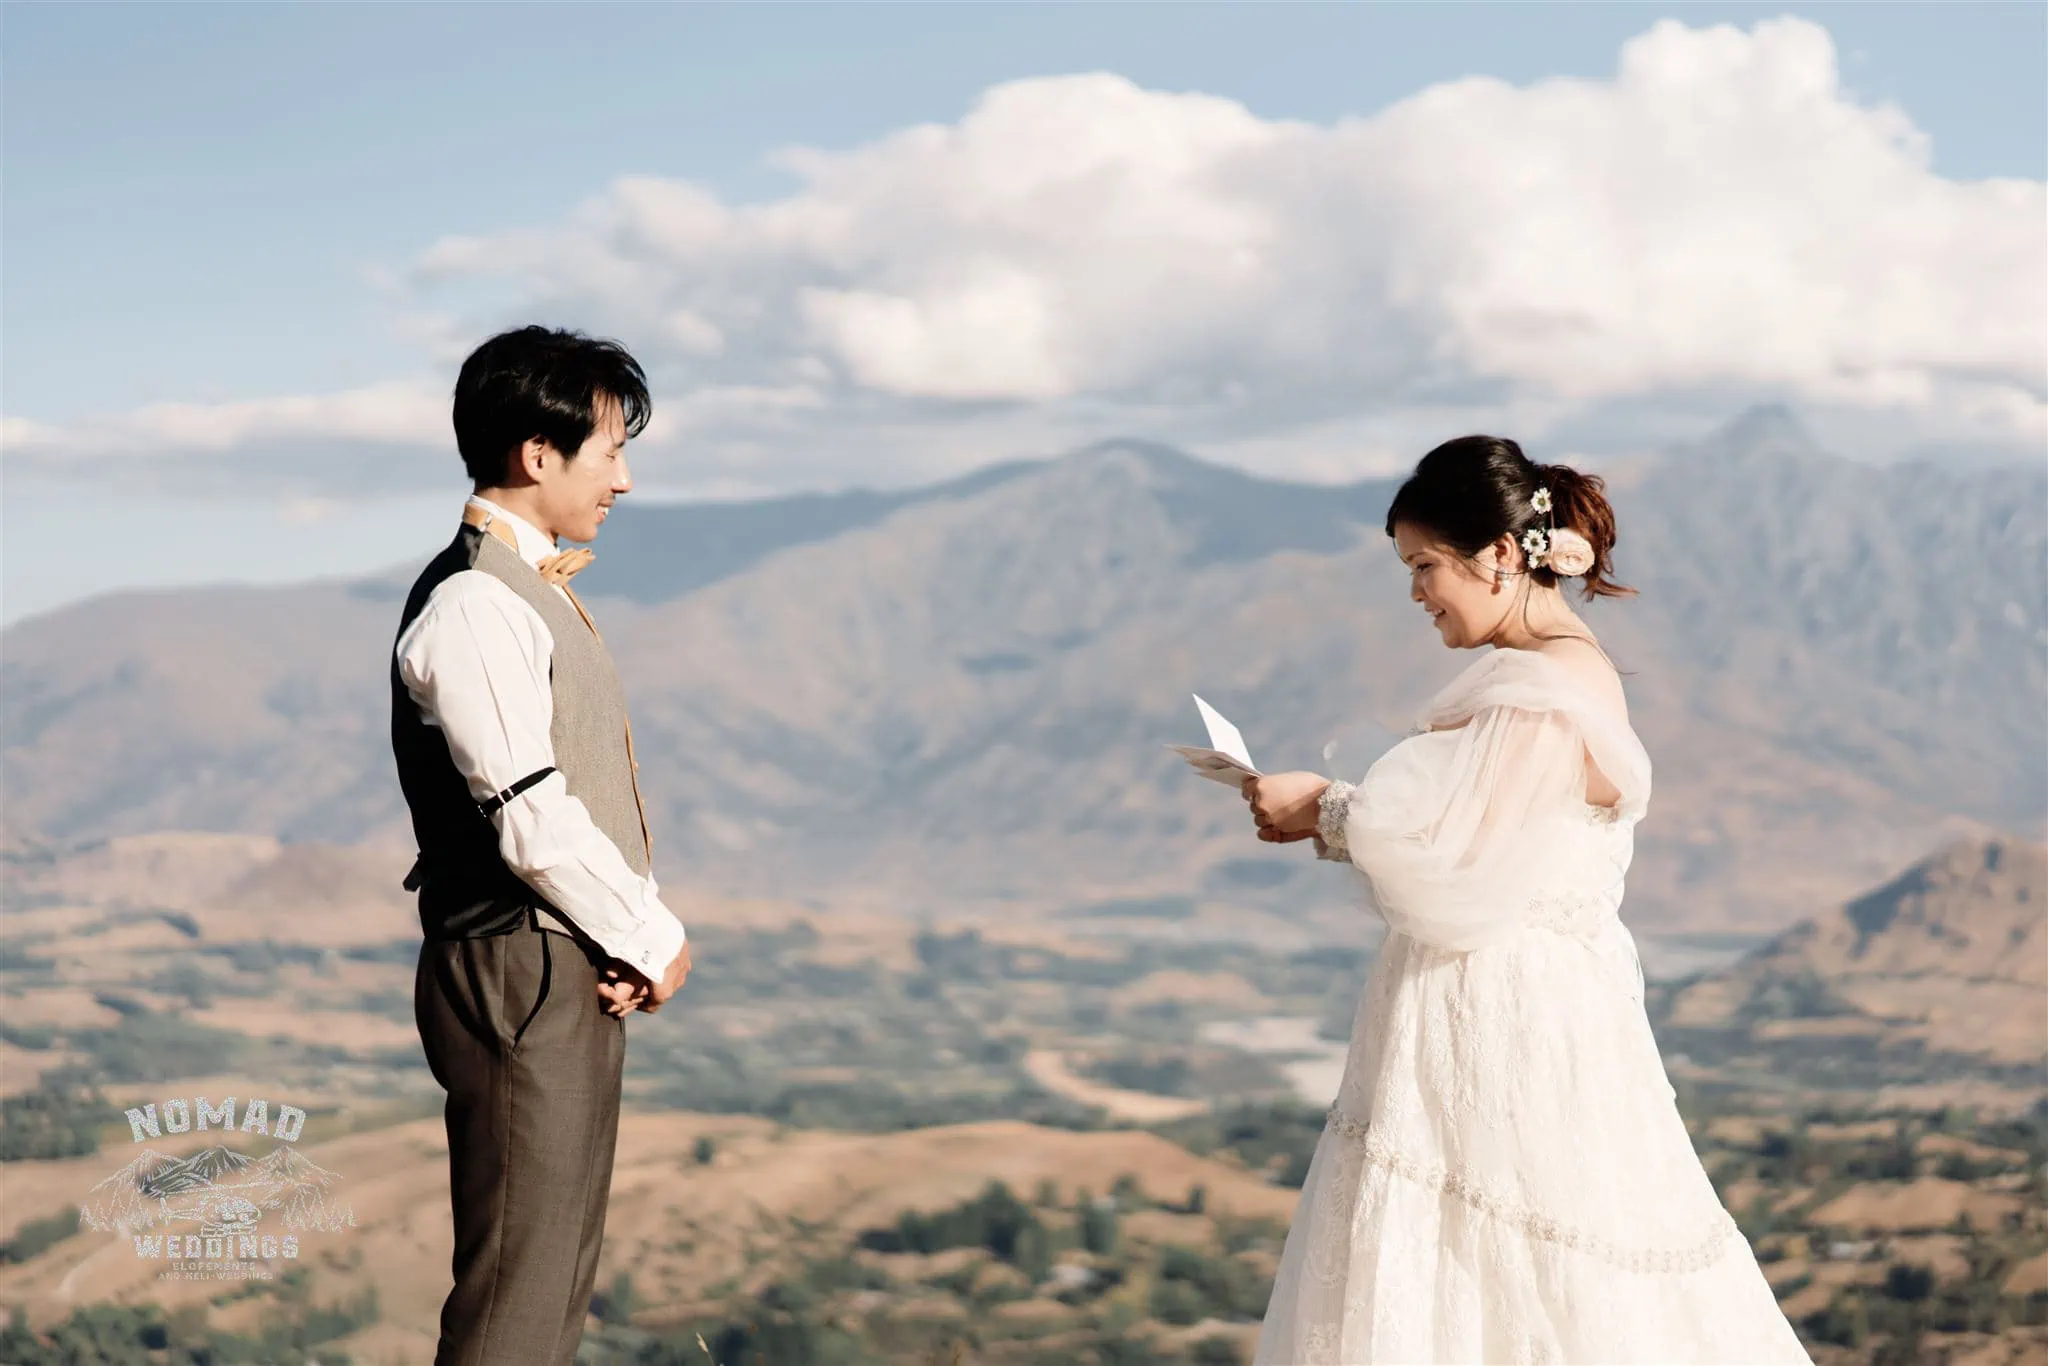 Queenstown New Zealand Elopement Wedding Photographer - A bride and groom on a mountain in Queenstown.